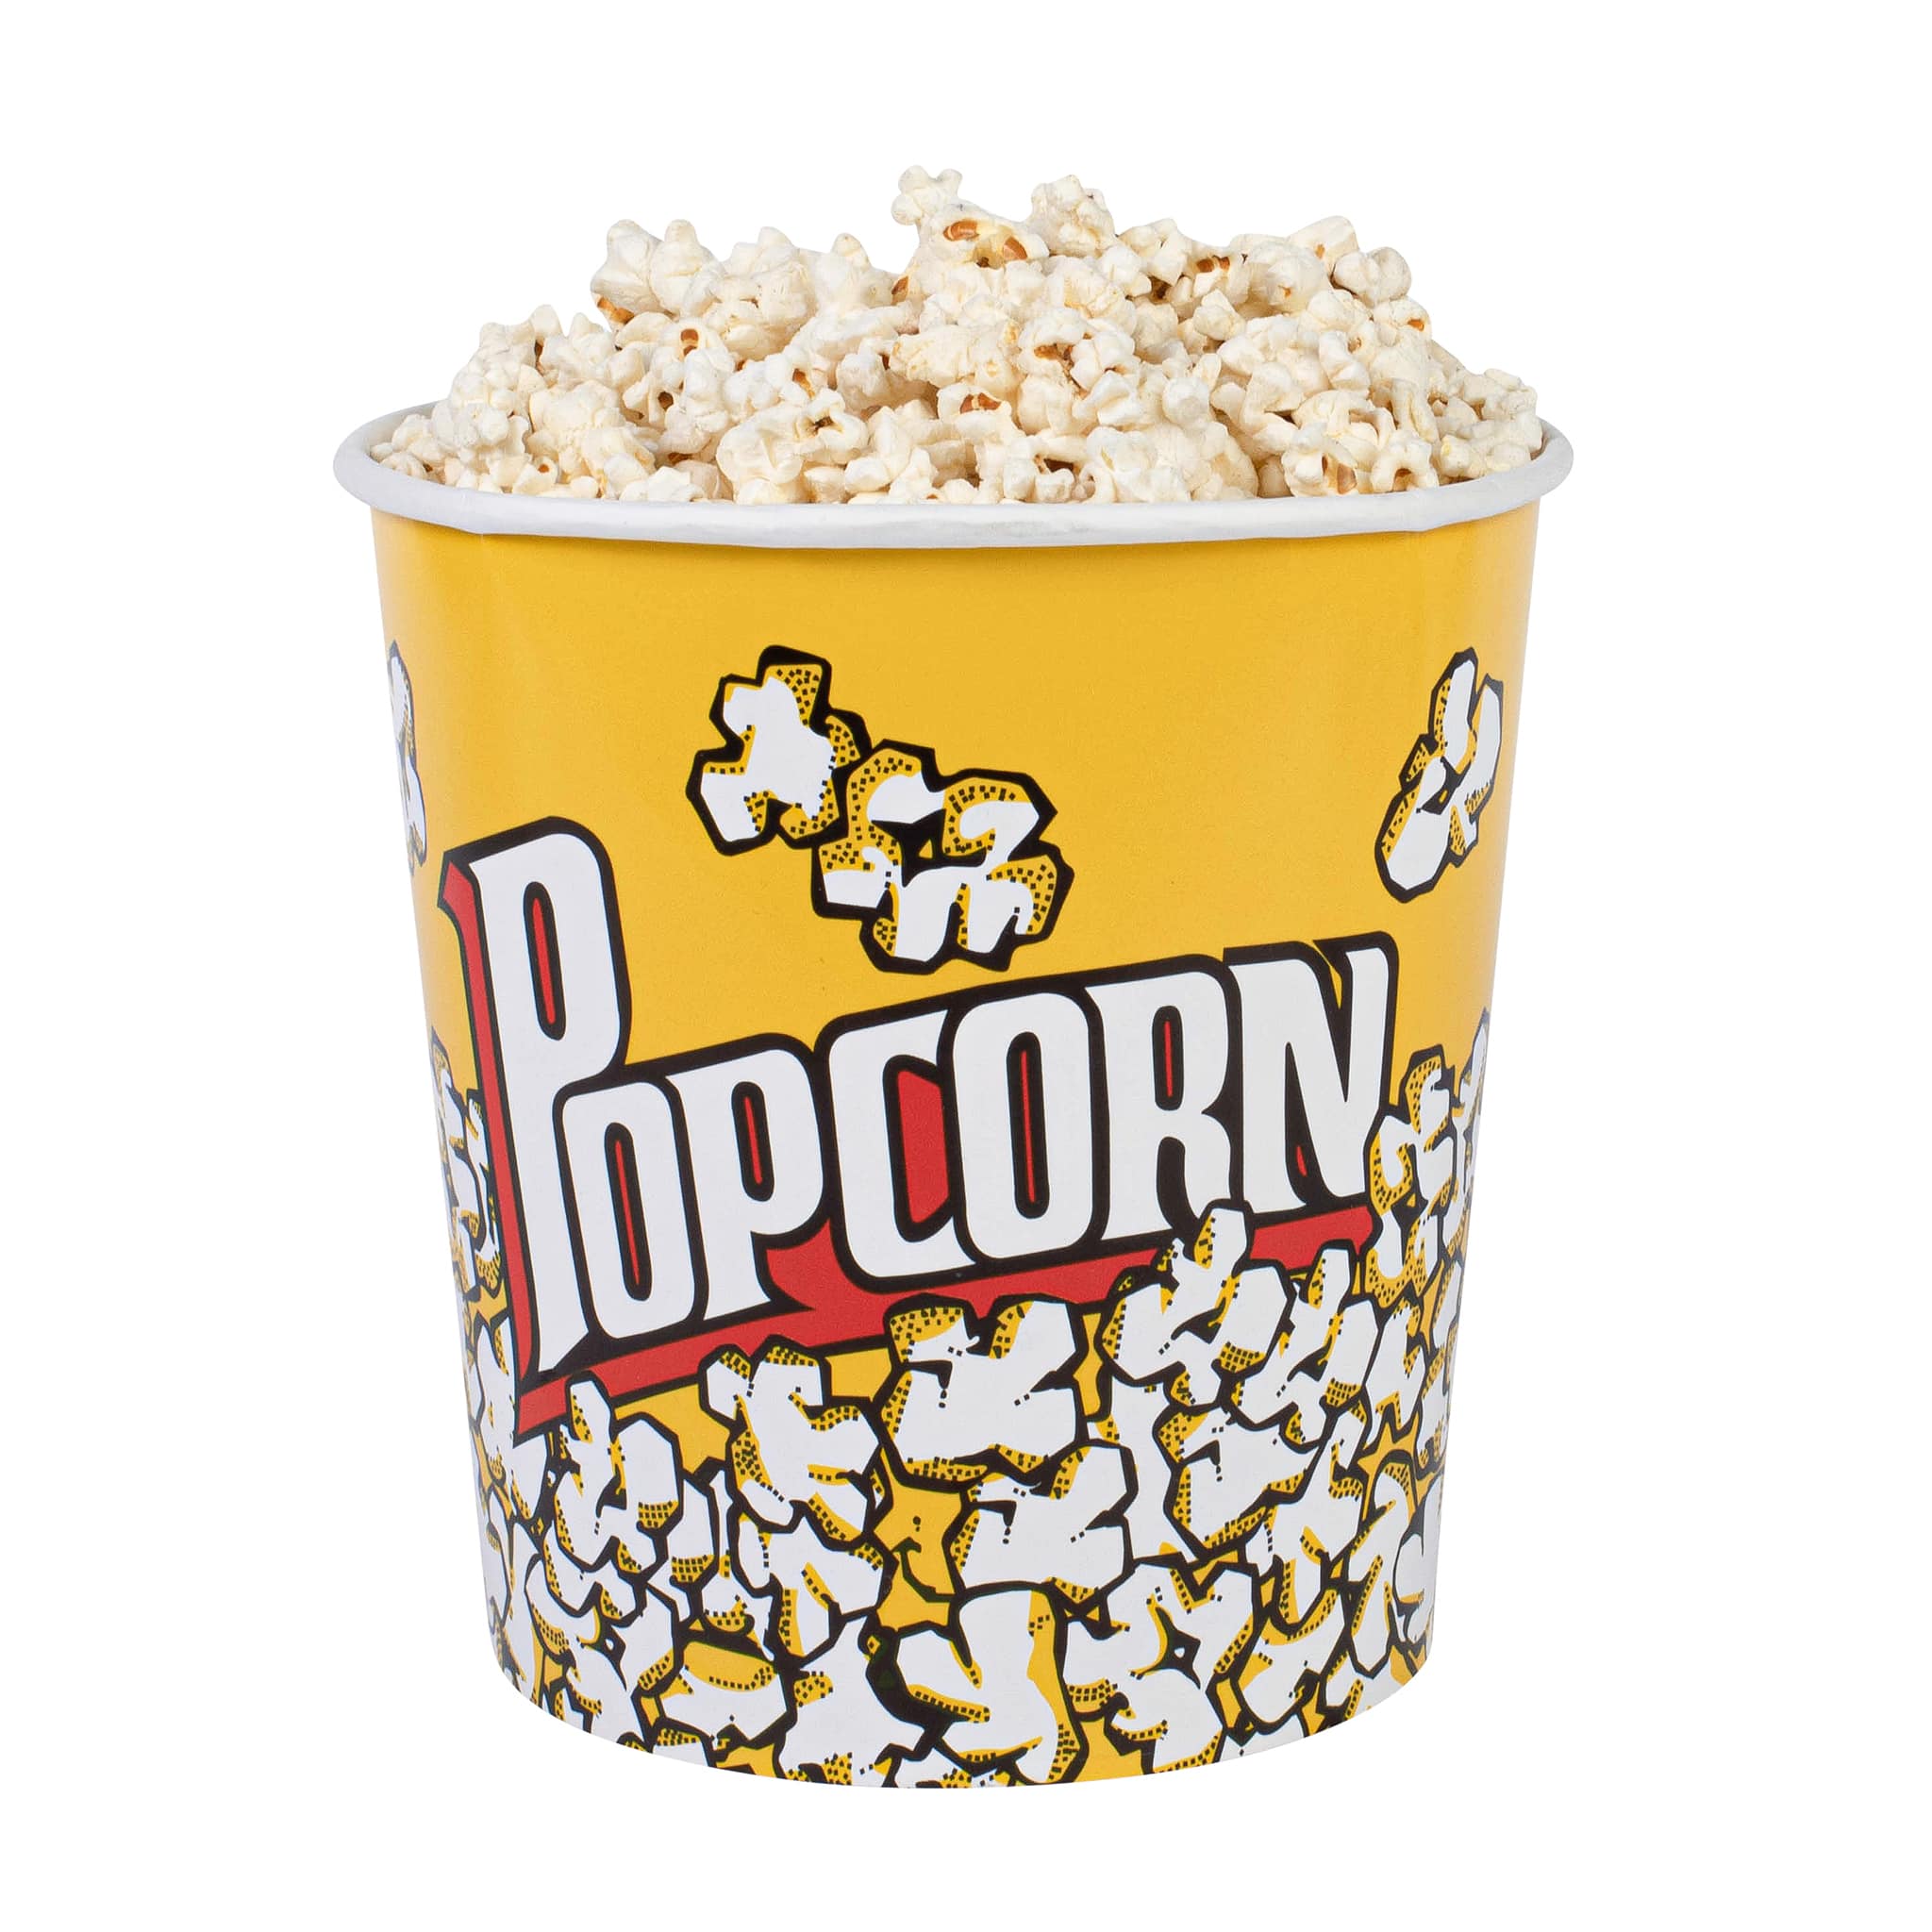 Single-Head Popcorn Topping Dispenser